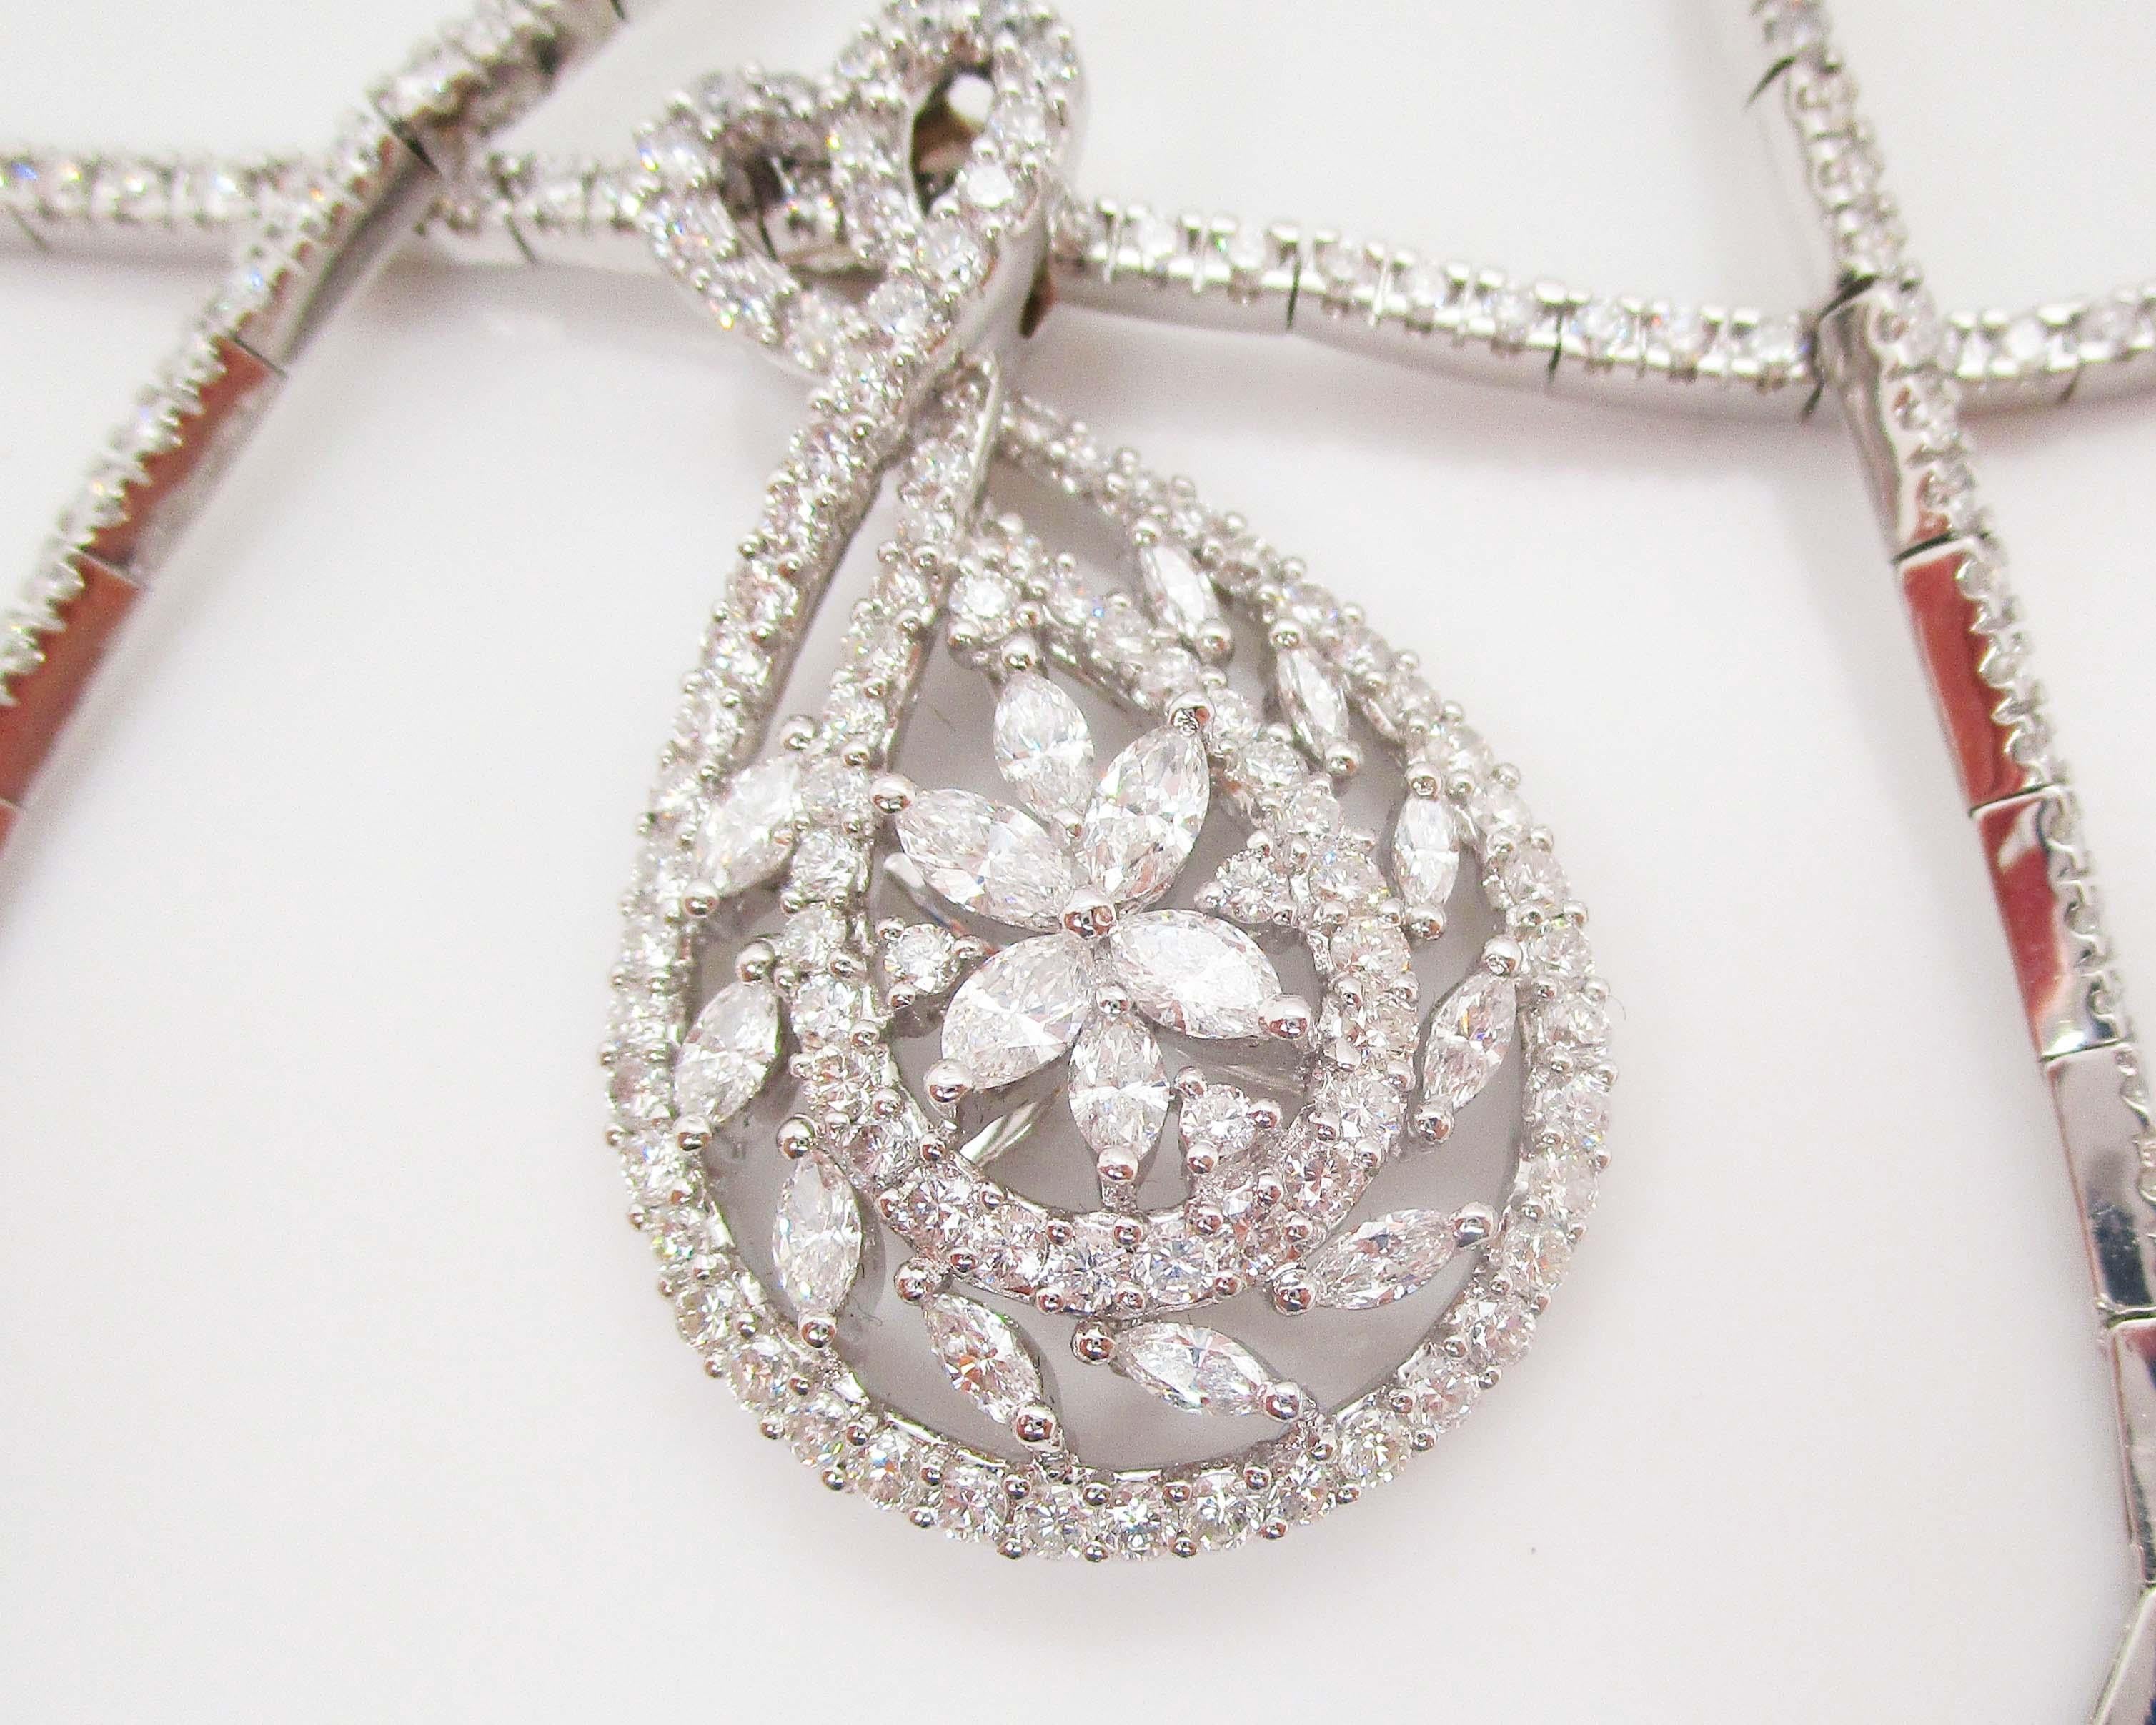 18 Karat Gold Diamond Necklace with Removable 18 Karat Diamond Teardrop Pendant In Excellent Condition For Sale In Lexington, KY